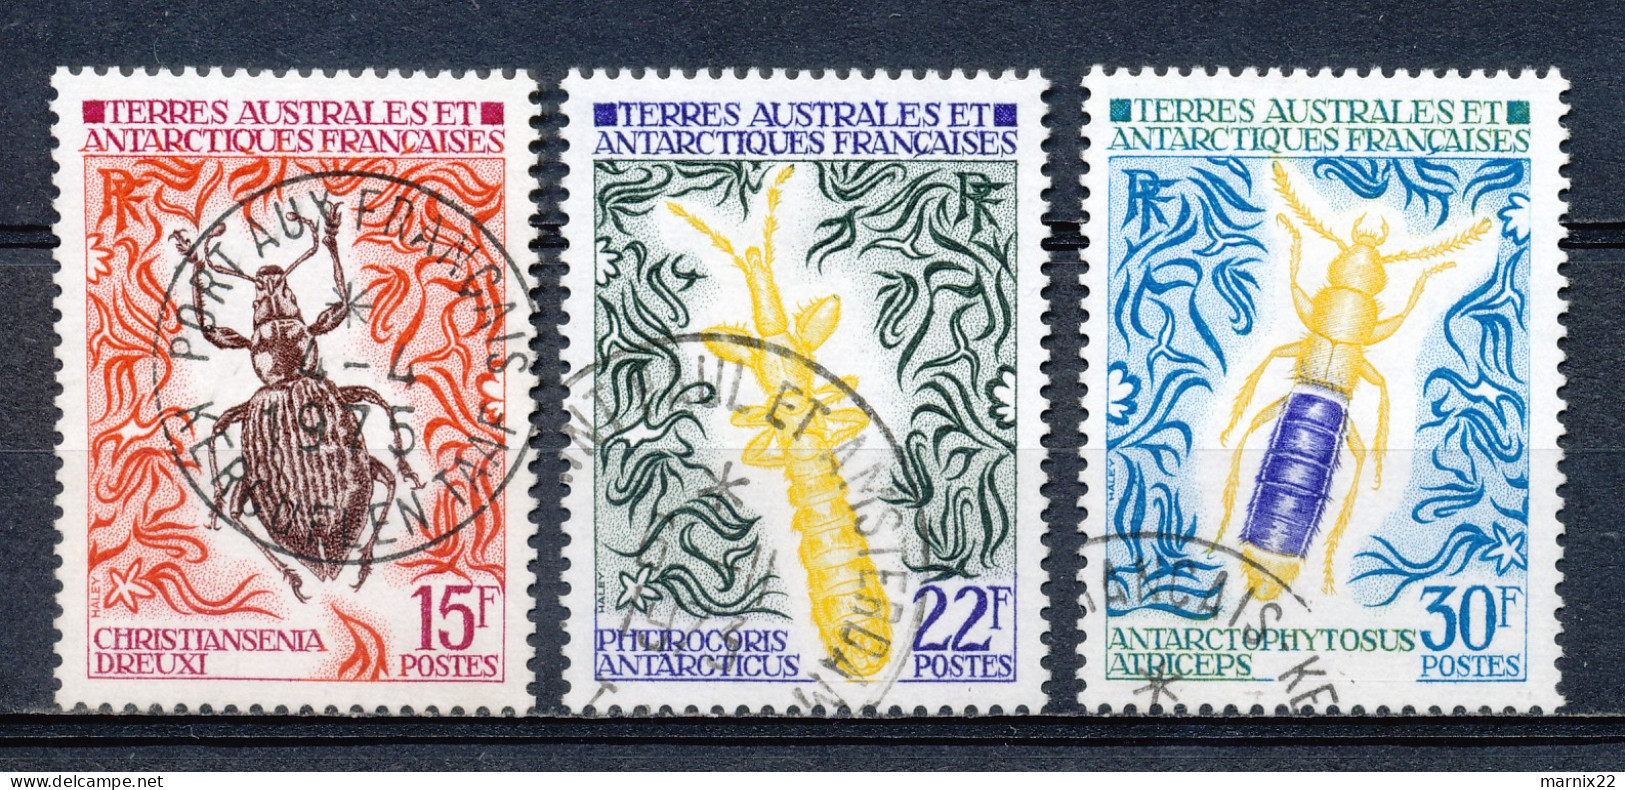 1973 - INSECTS - CHRISTIANSENIA DREUXI/PHITIROCORIS ANTARCTIUS/ANTERCTOPHYTOSUS ATRICEPS  - VFU                    Hk324 - Used Stamps